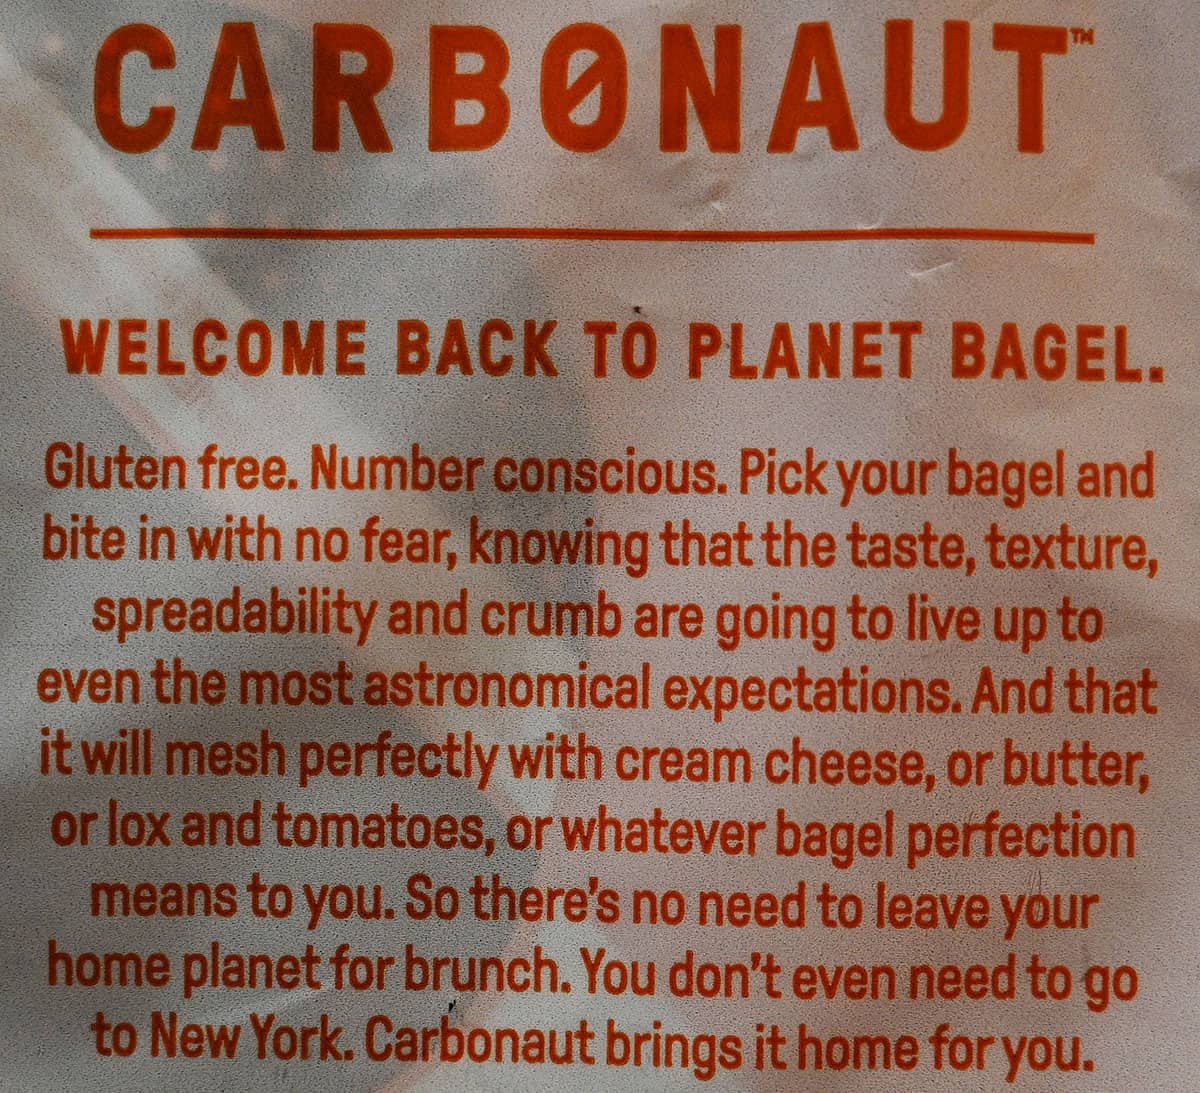 Carbonaut bagel product description from the bag.